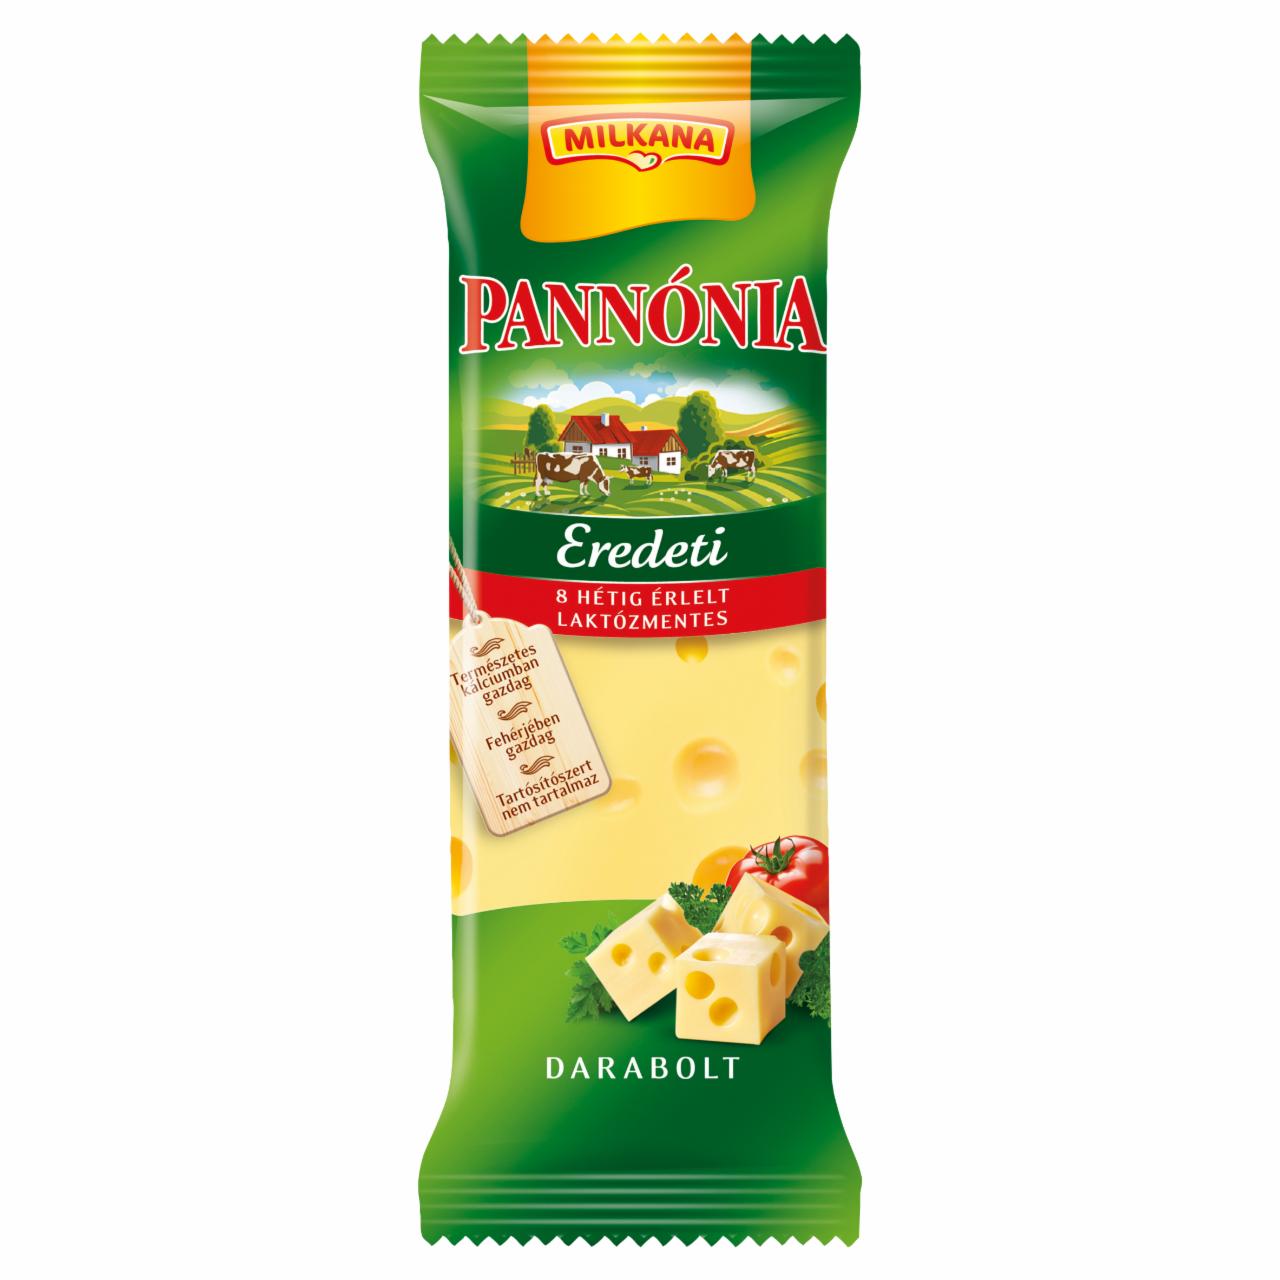 Képek - Pannónia Eredeti darabolt sajt 200 g